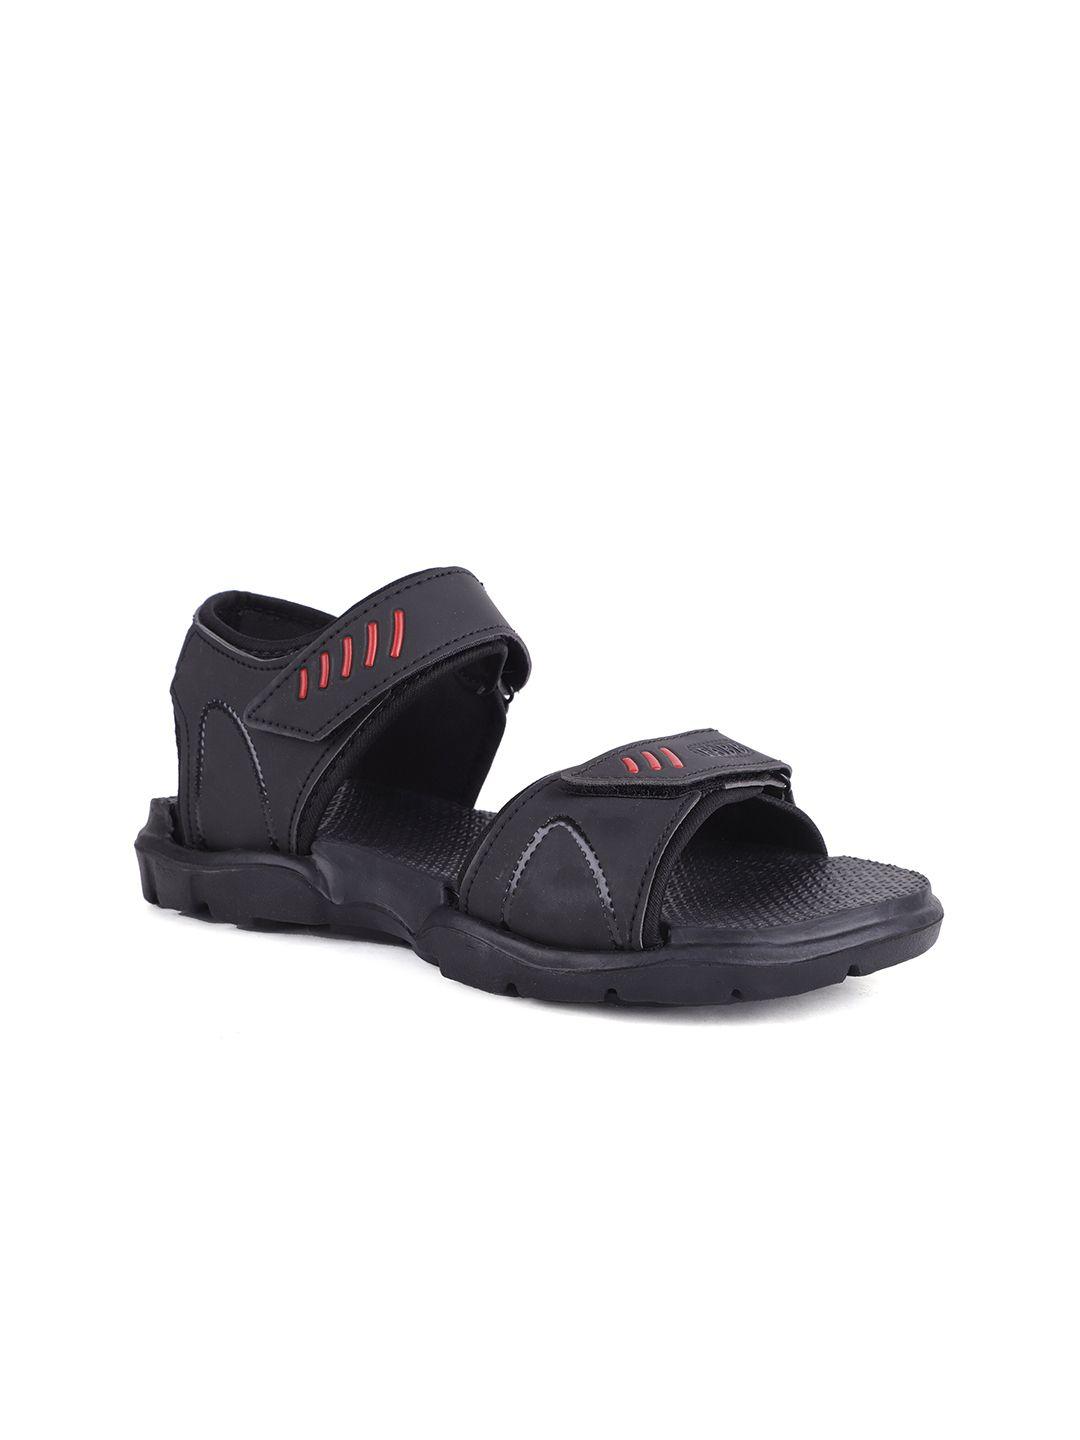 fabbmate-men-black-sports-sandals